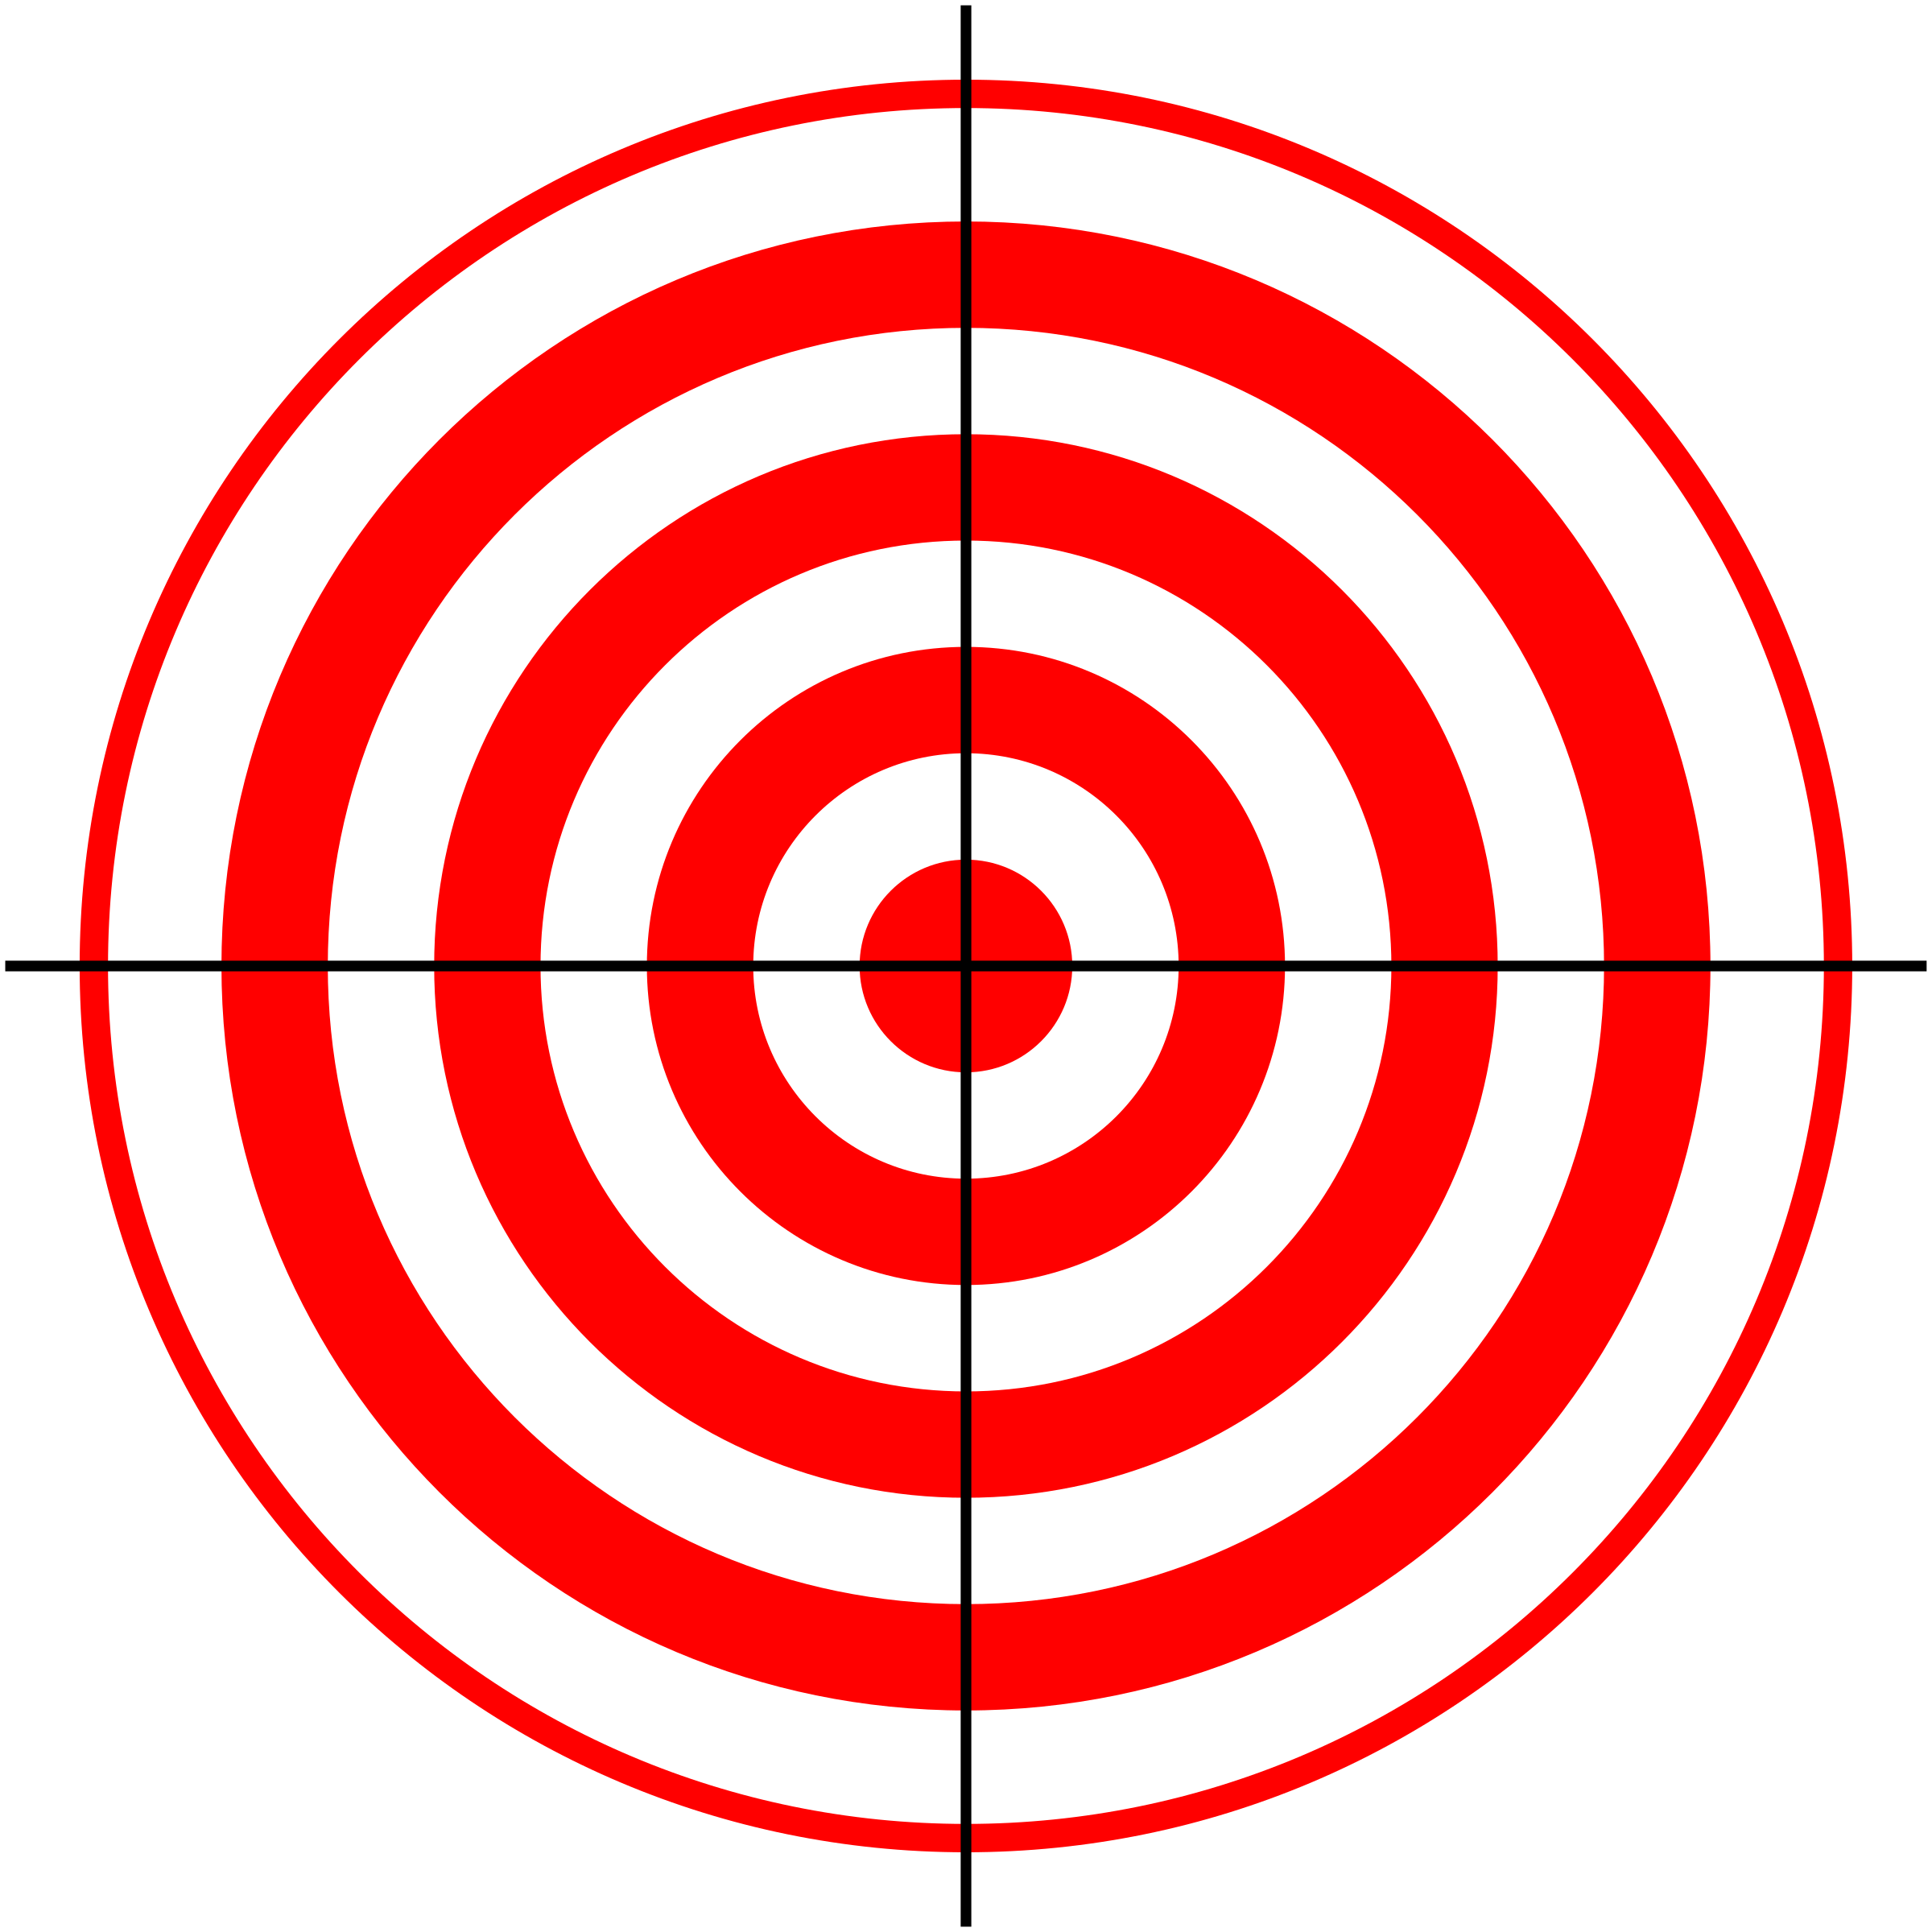 Free PNG Target Bullseye Transparent Target Bullseye.PNG Images. PlusPNG